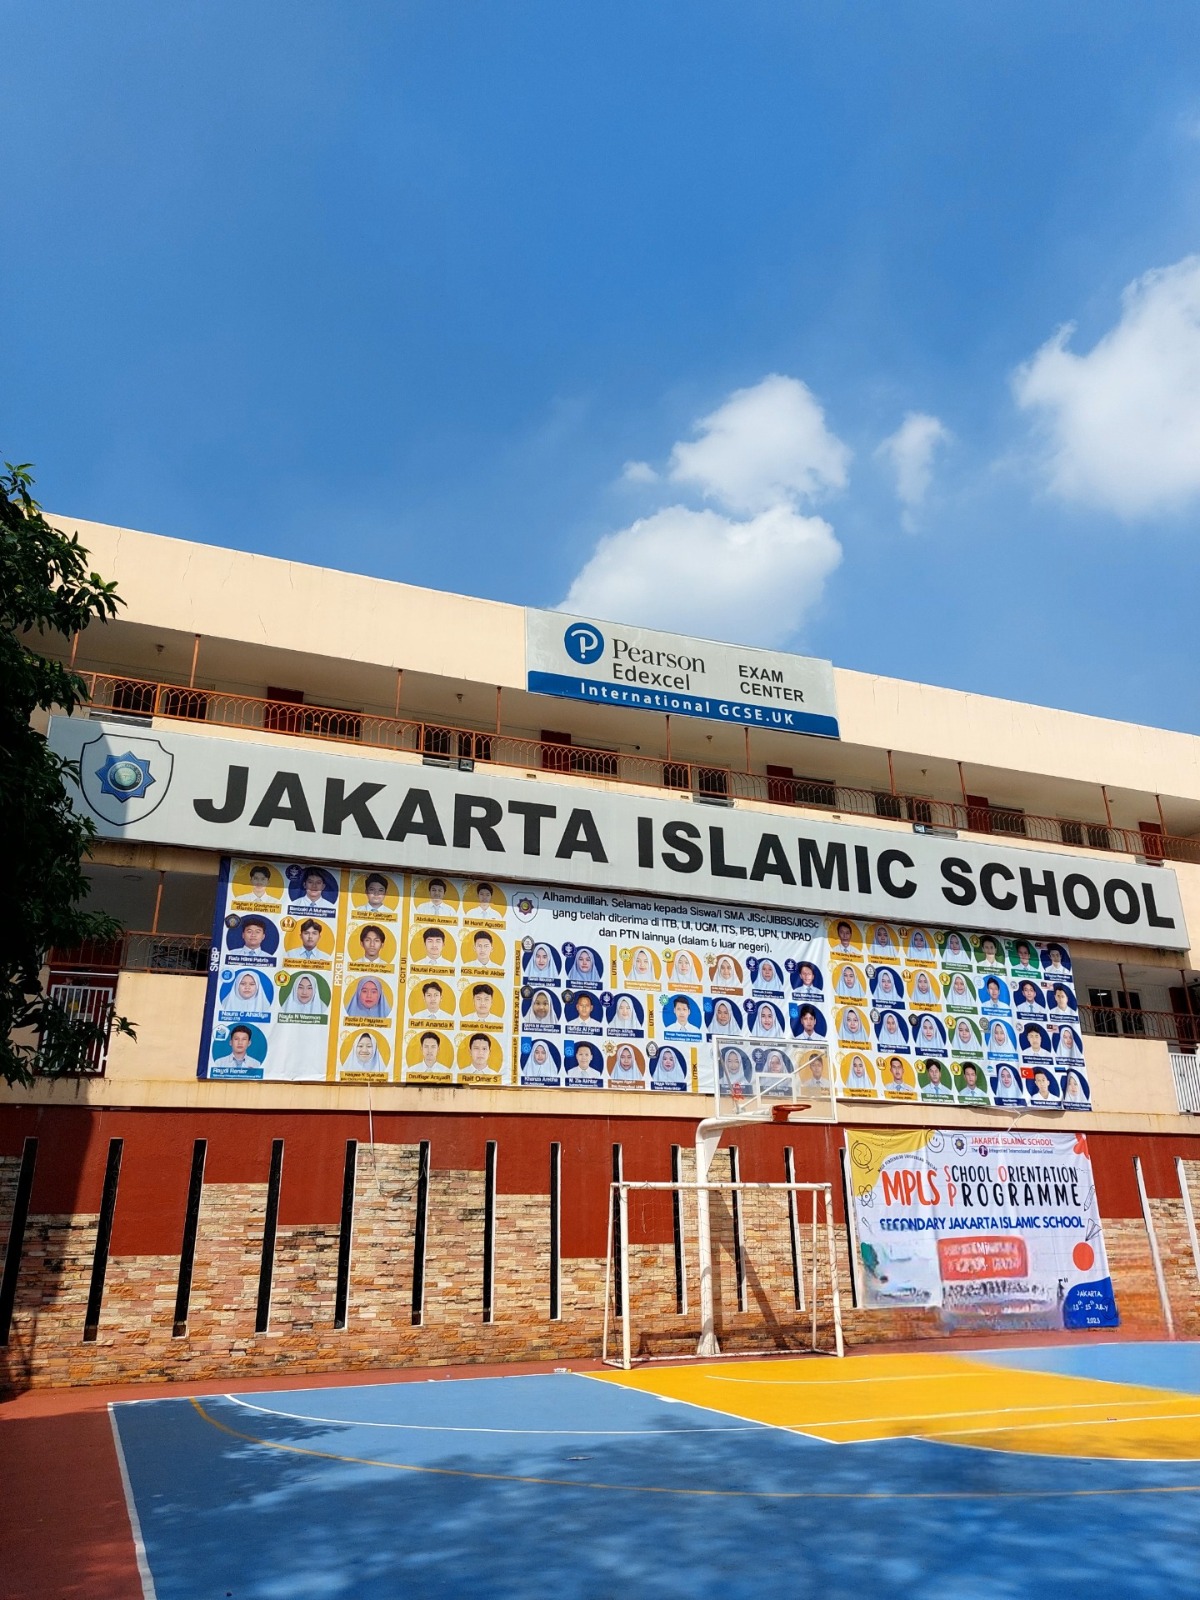 JAKARTA ISLAMIC SCHOOL